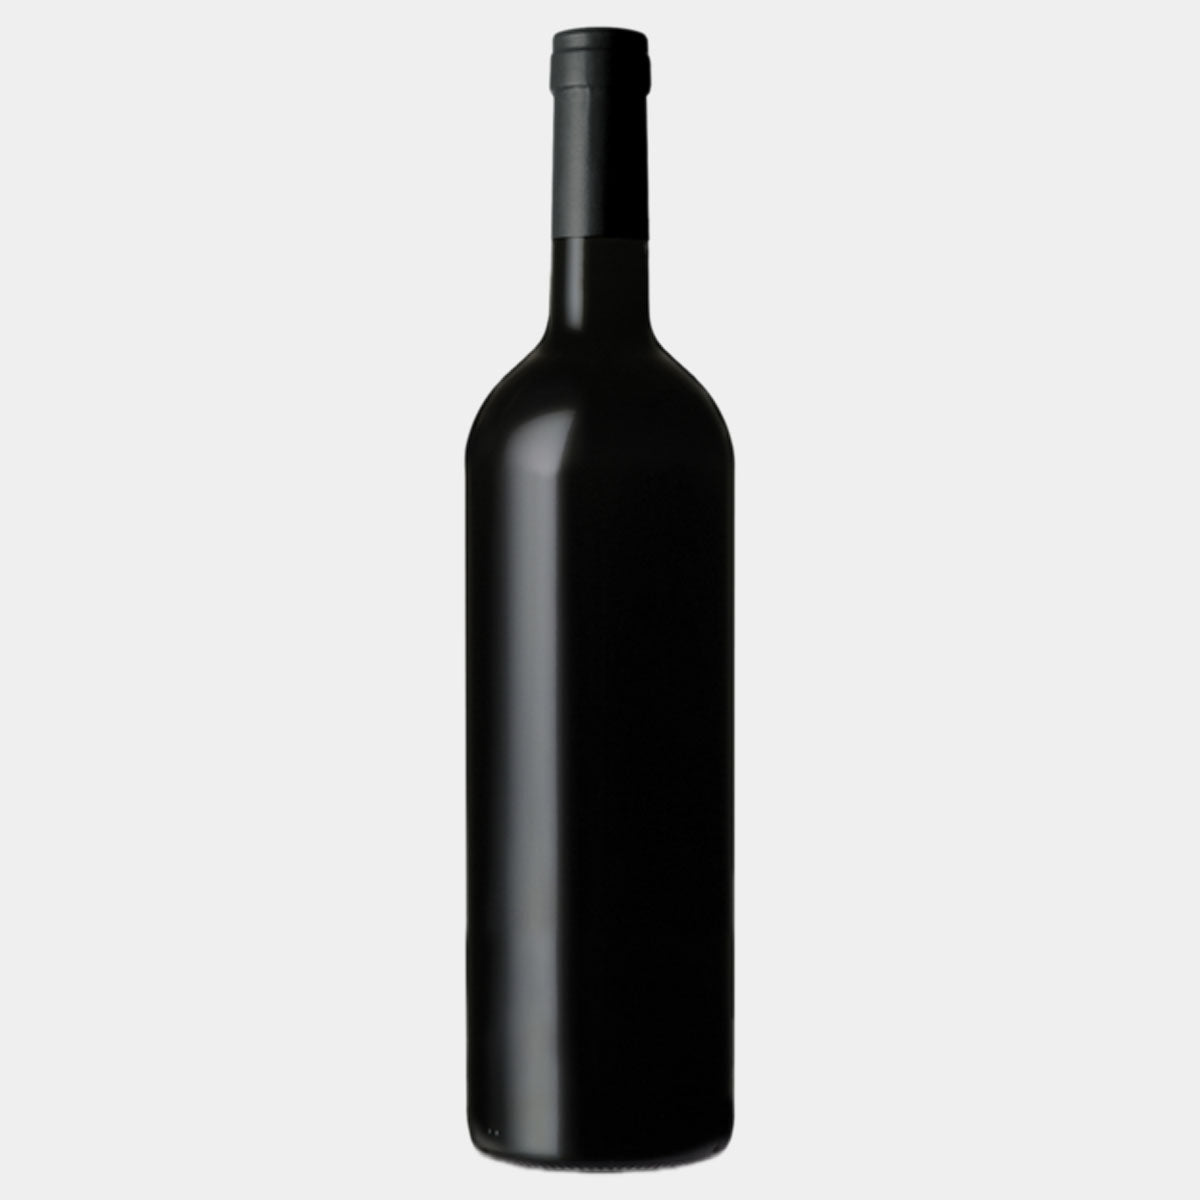 Domaine Camus Bruchon Bourgogne 2018 - Wines and Copas Barcelona